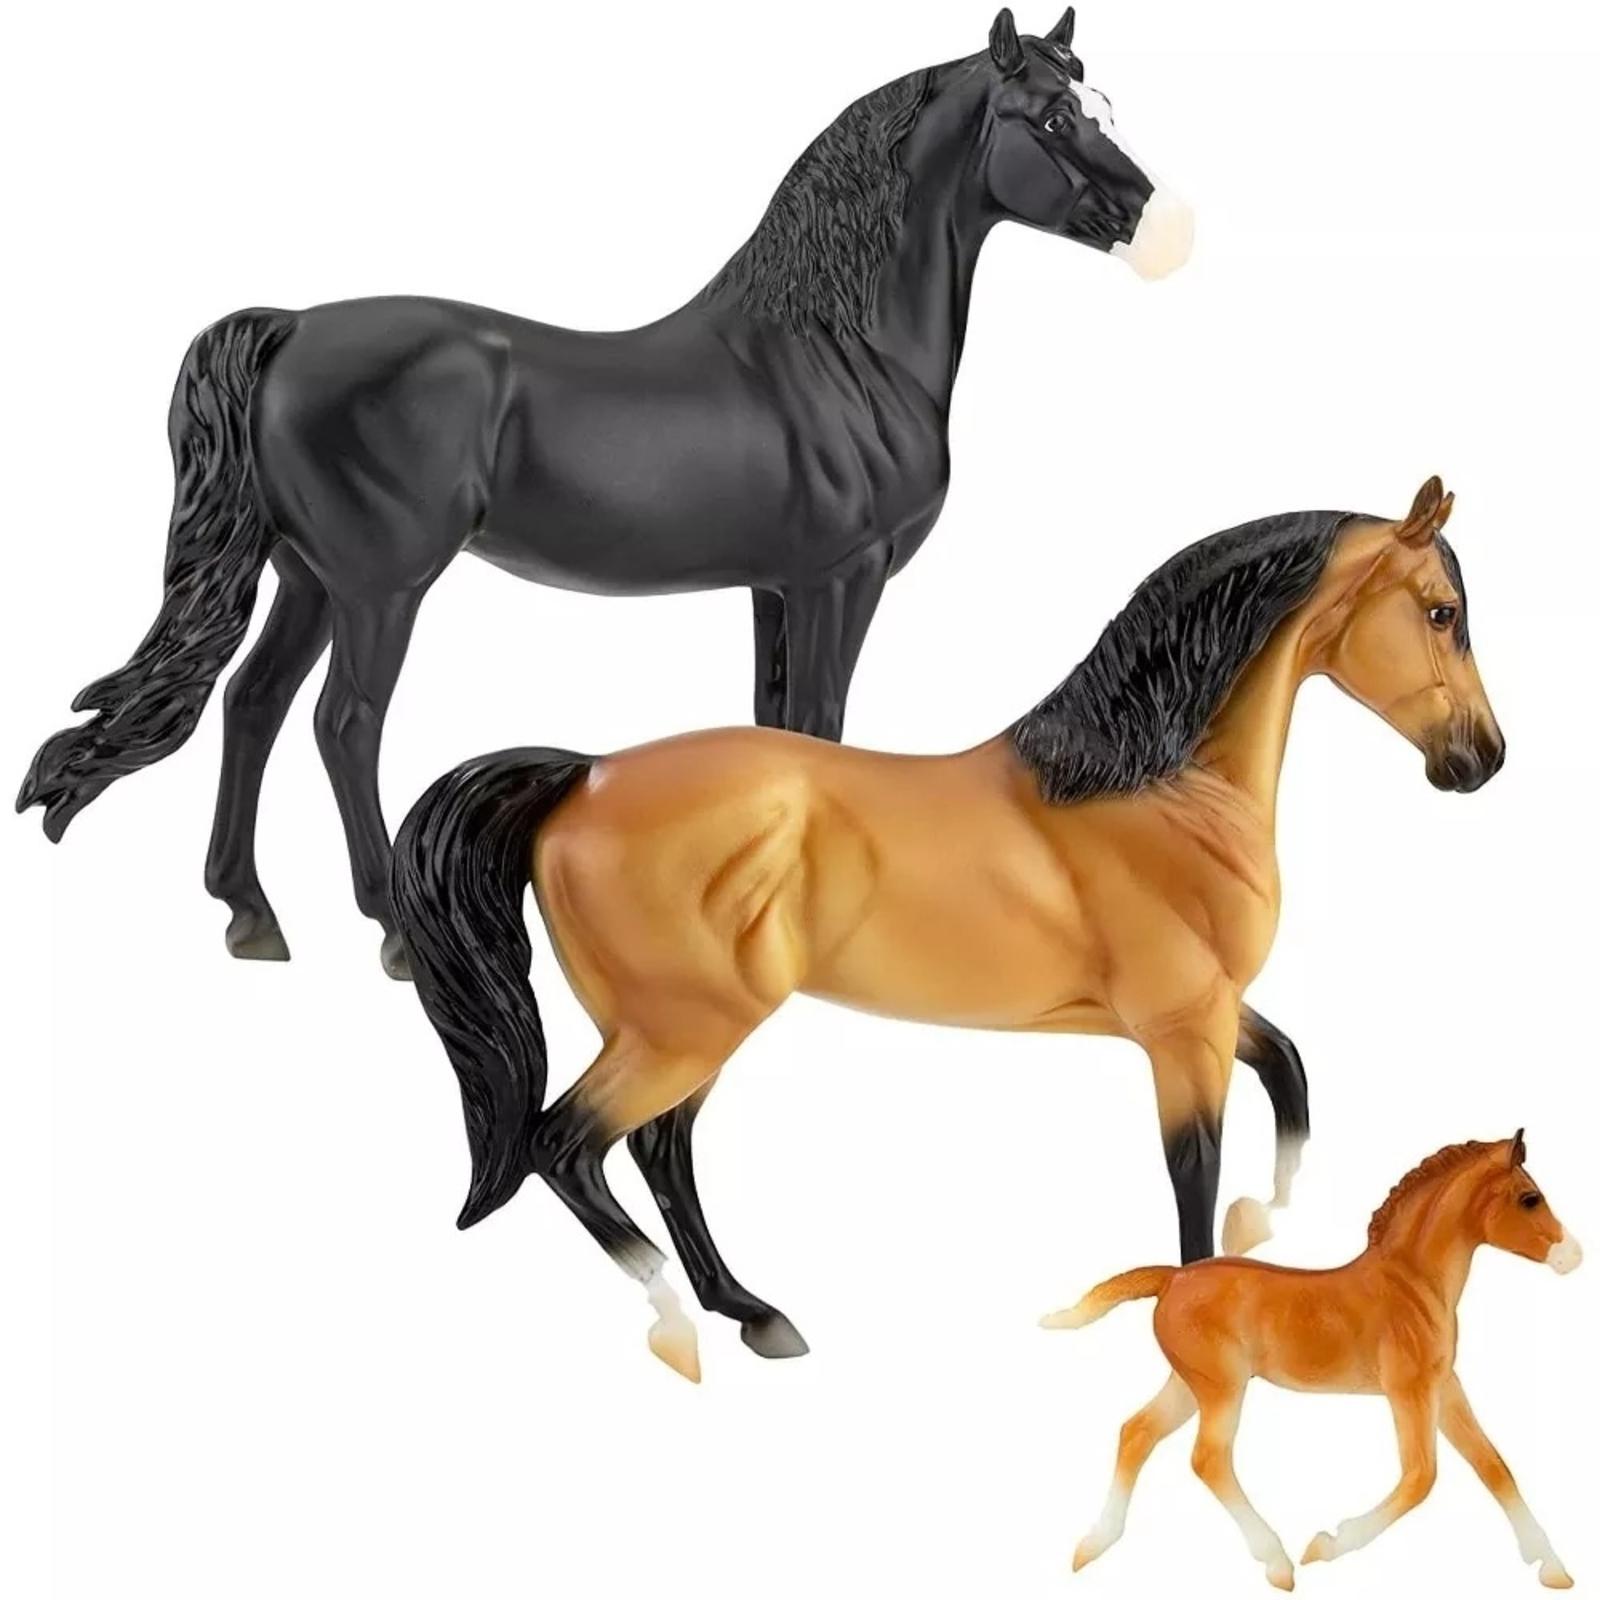 Breyer Animal Creations 1:12 Scale Model Horse Set Spanish Mustang Family